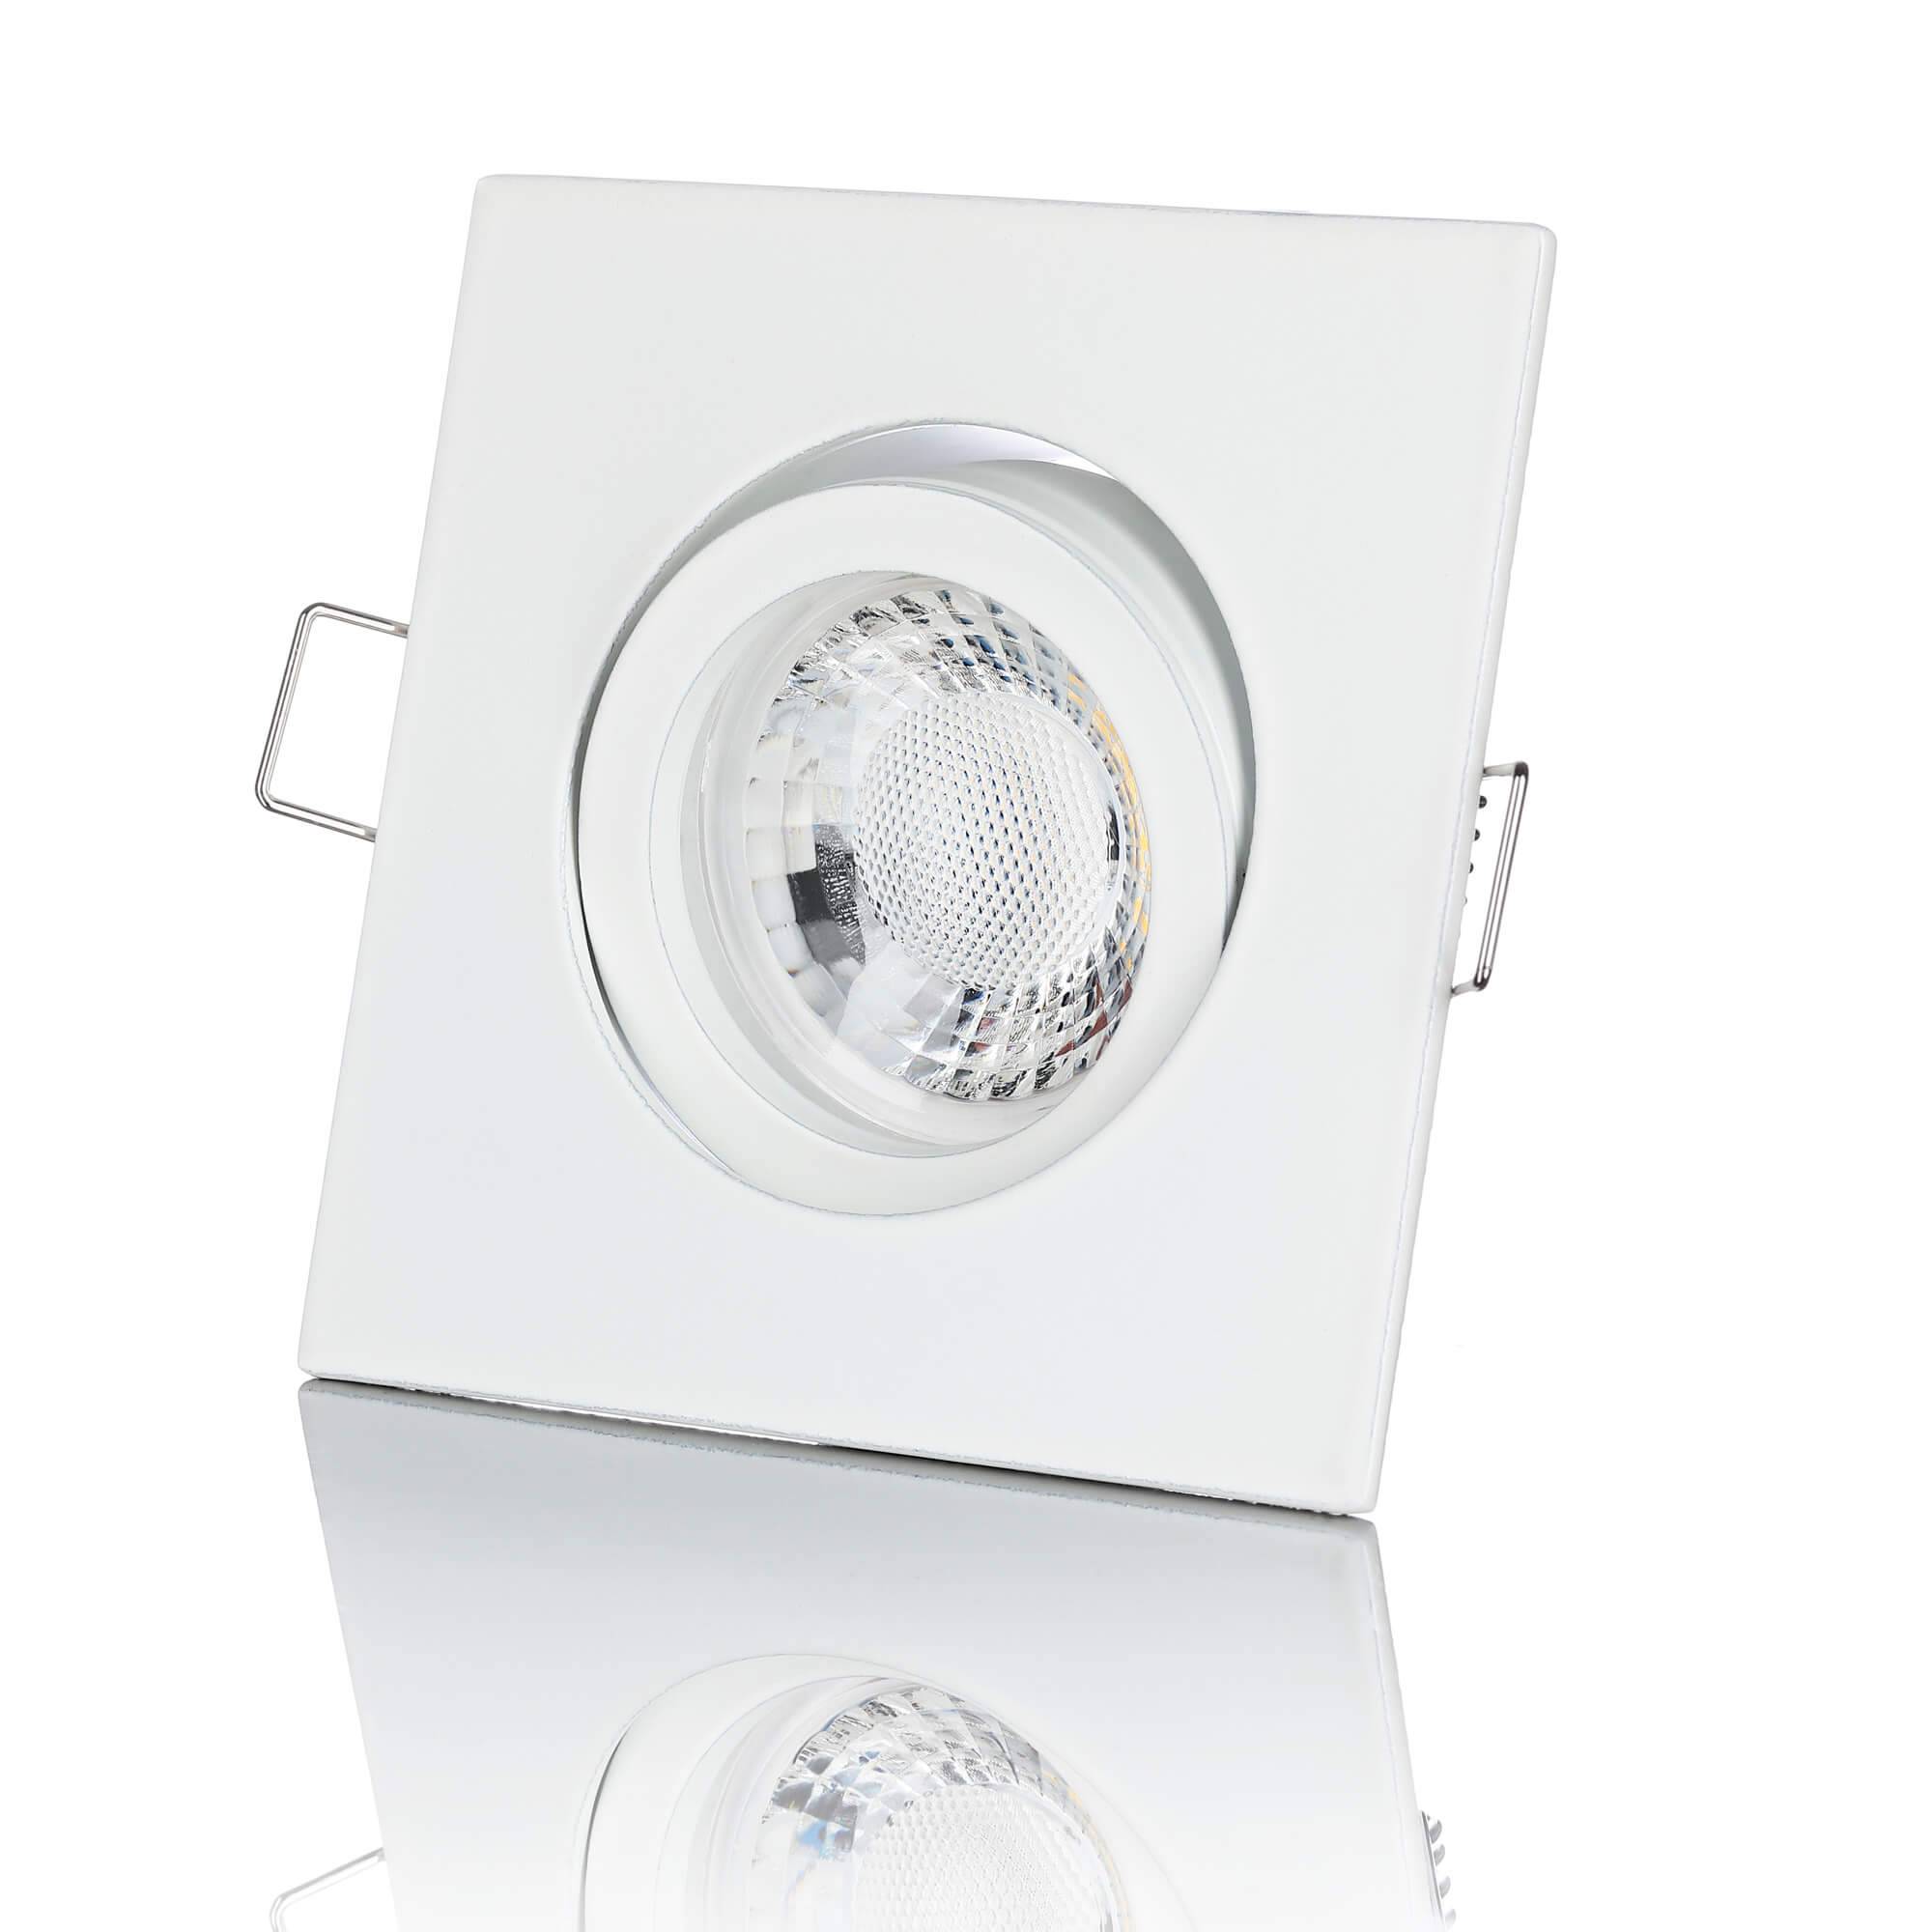 LED Einbaustrahler 230V - Weiß Eckig 5W GU10 LED - Rapid